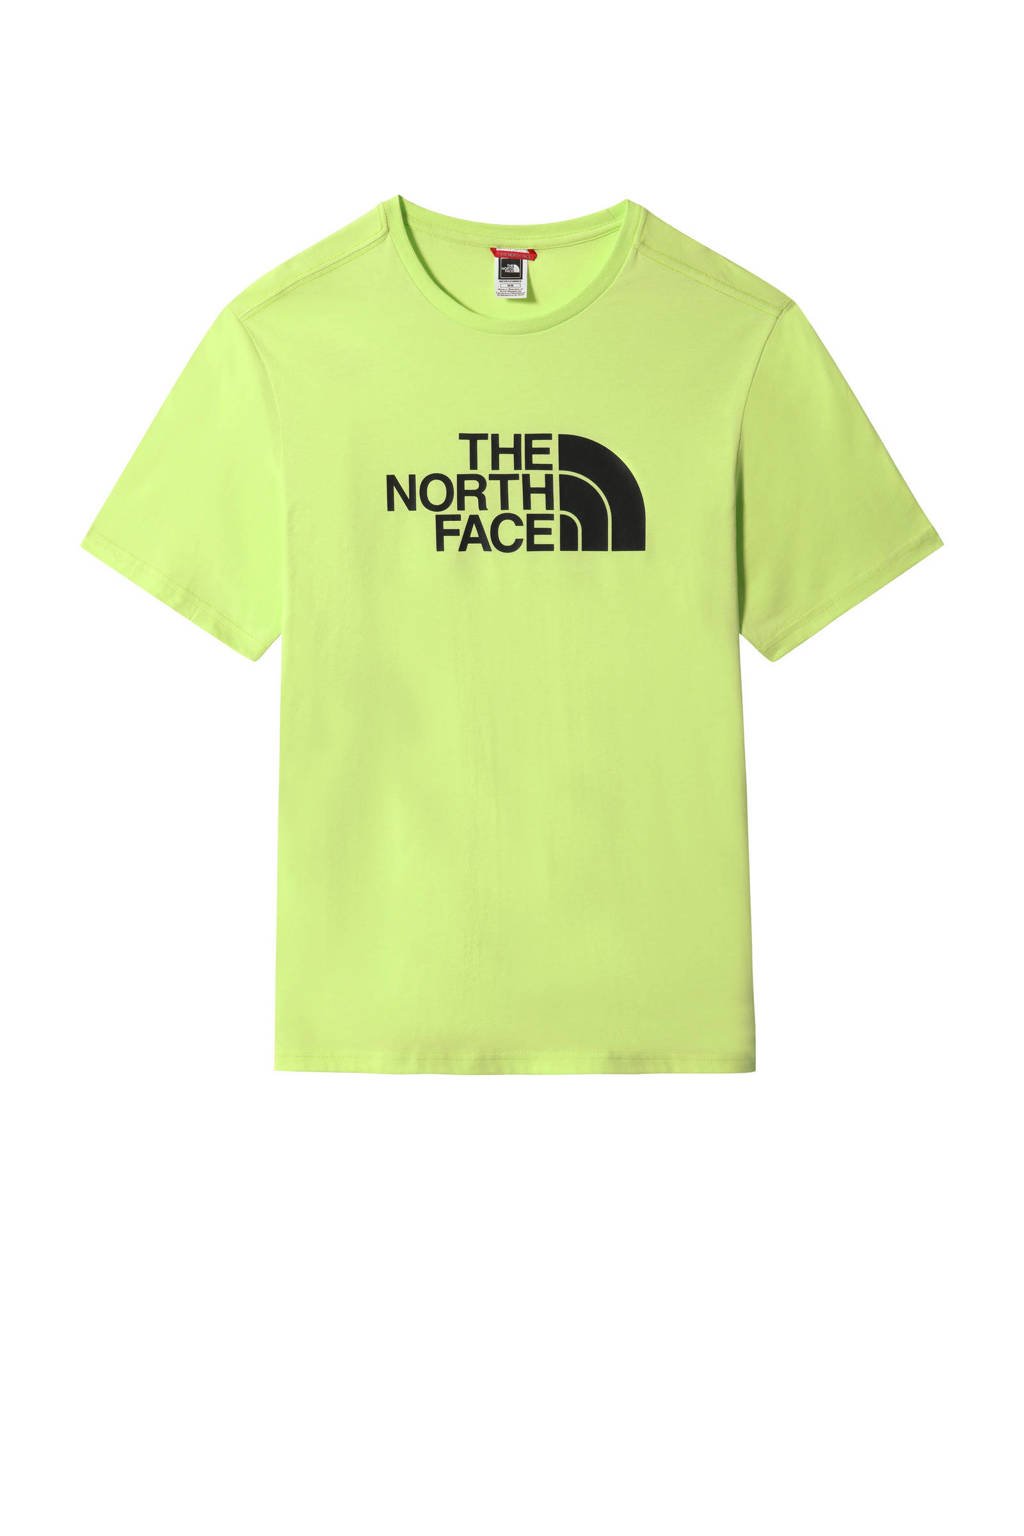 toegang Visa Ongeldig The North Face regular fit T-shirt Easy met logo limegroen | wehkamp